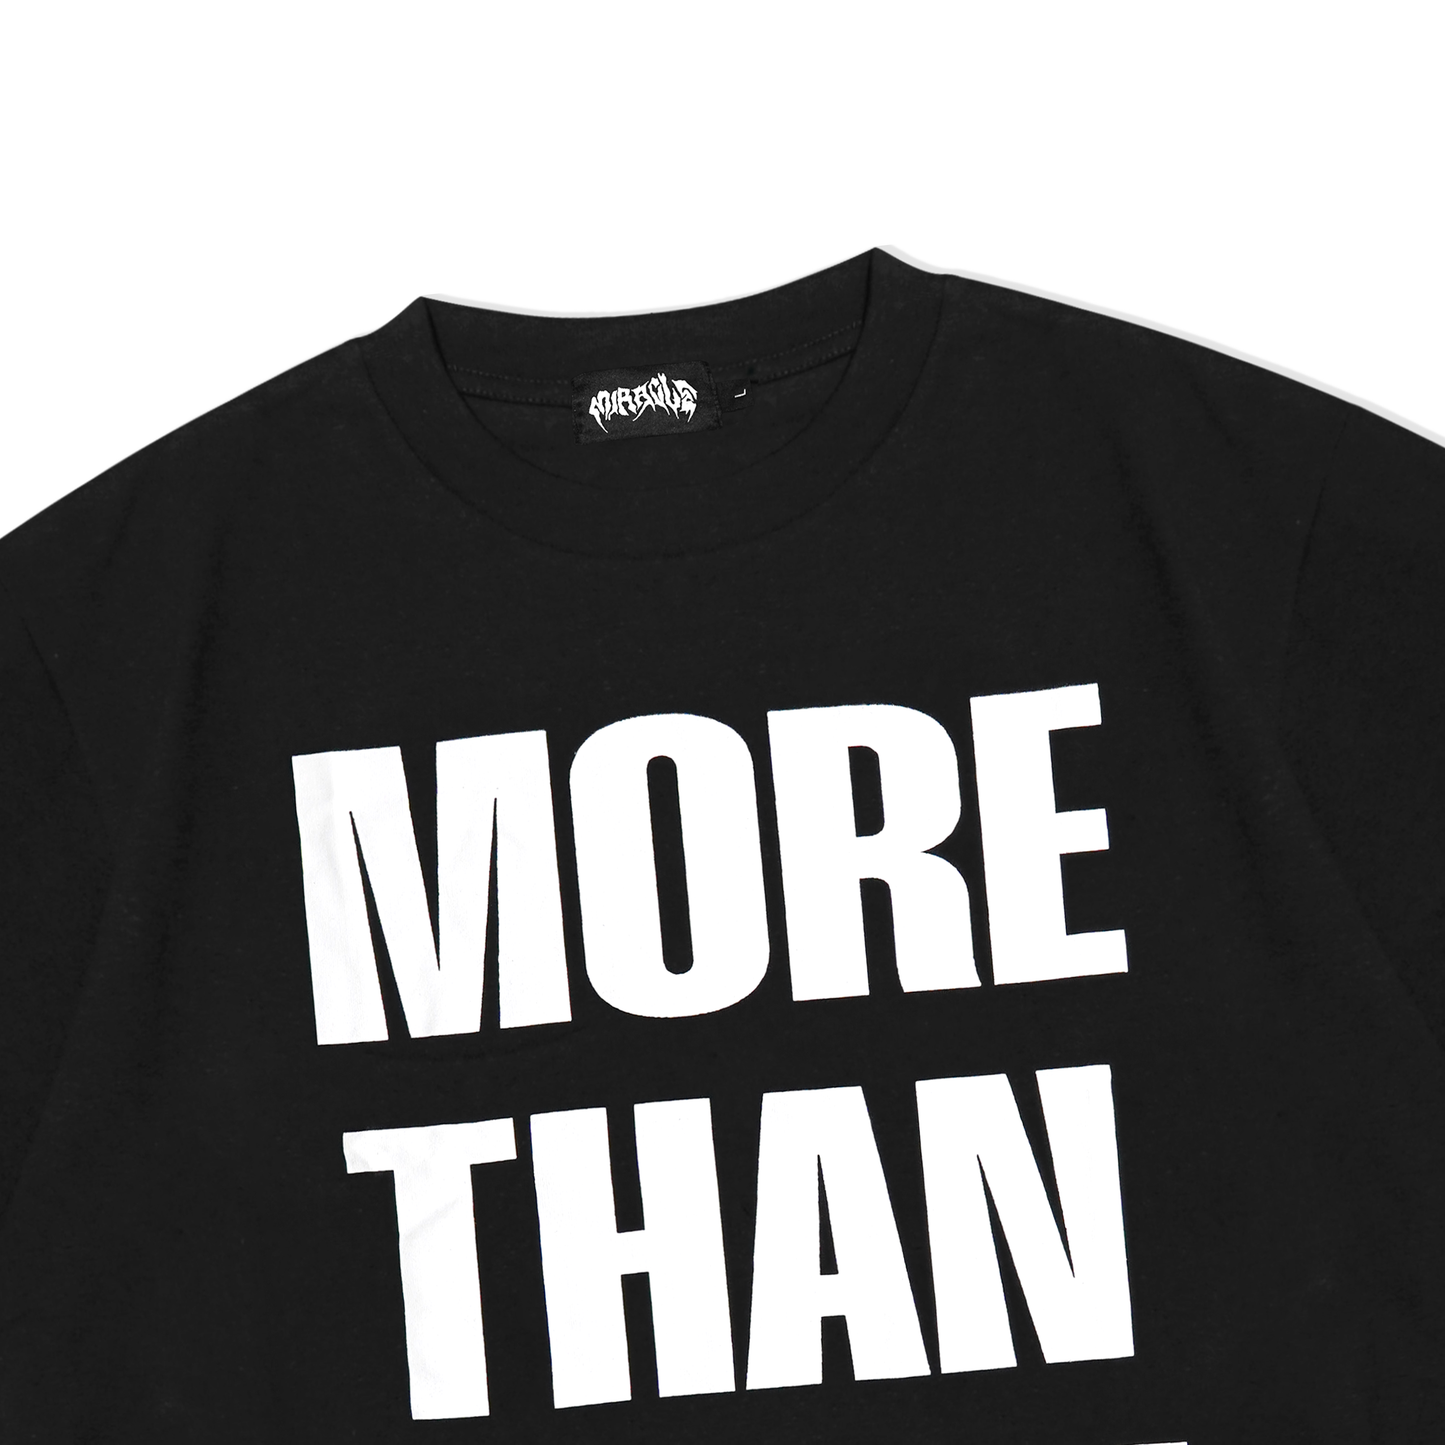 More Than Bi+ch Black Oversized T Shirt